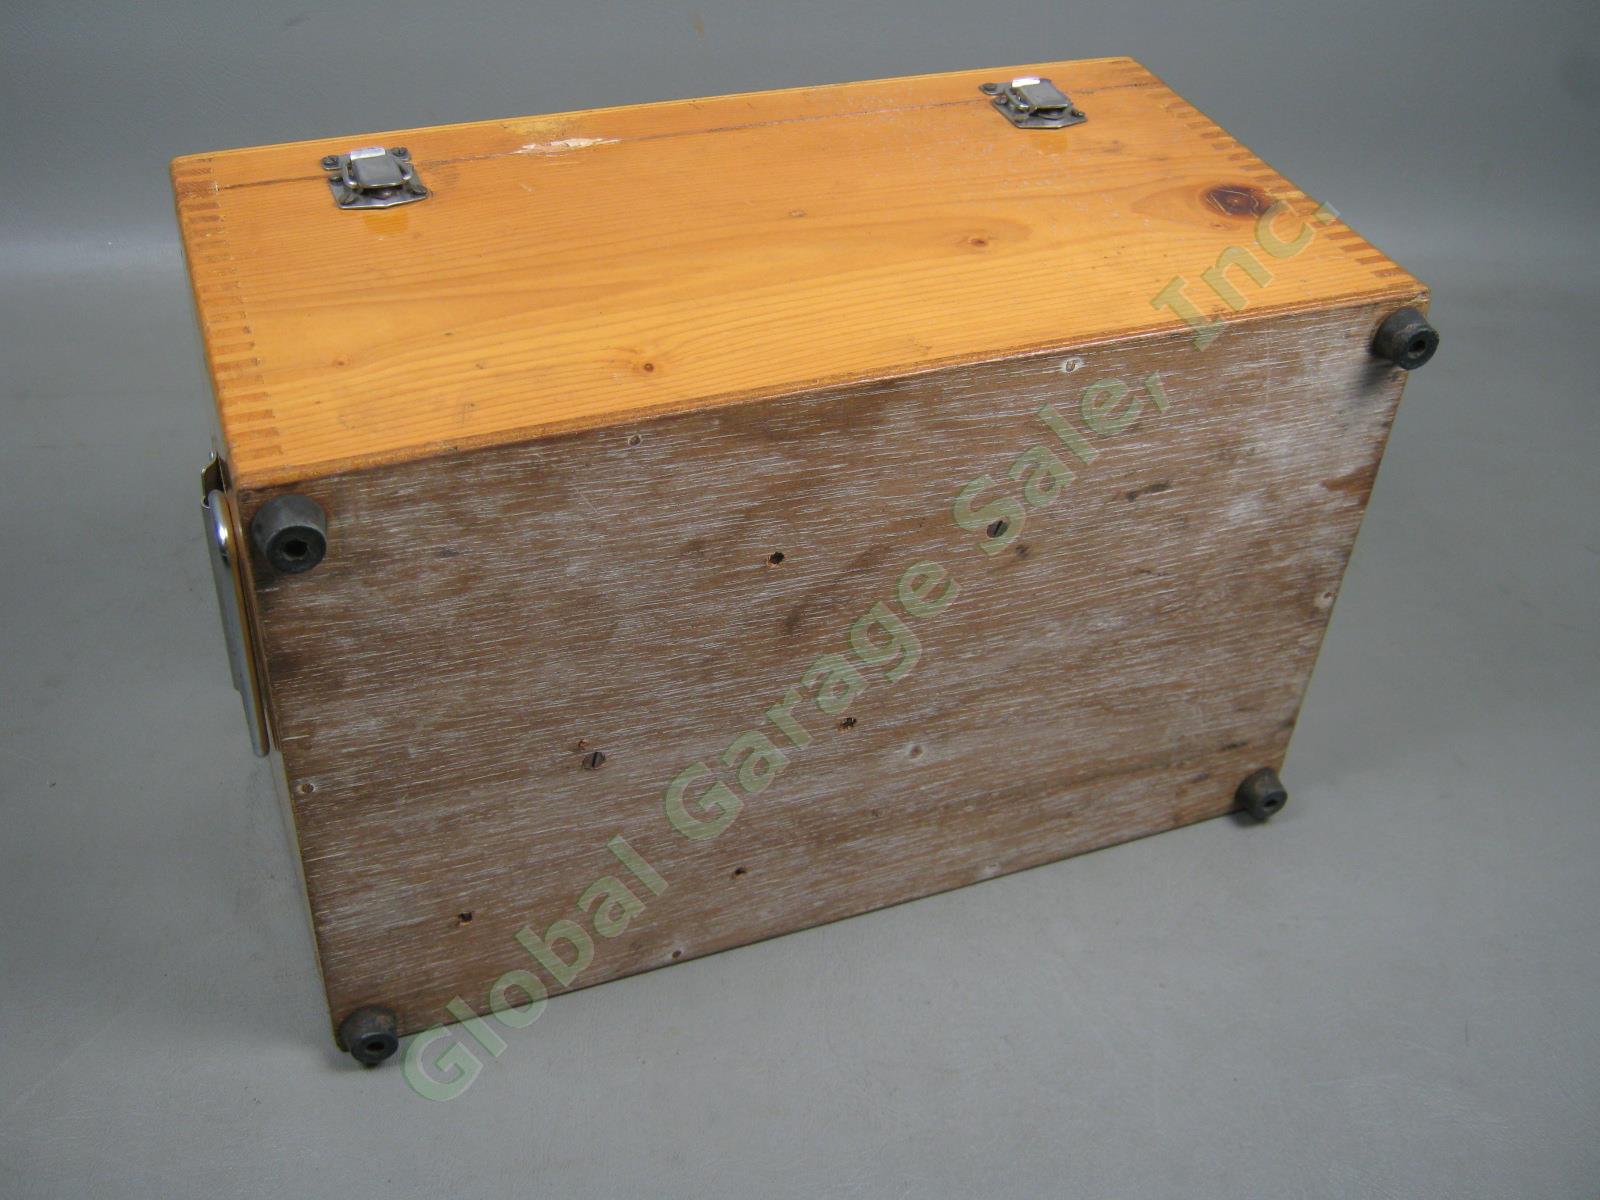 Chuan Brand Outside Micrometer Caliper Set 0-12" in W/ Wood Wooden Storage Case 7